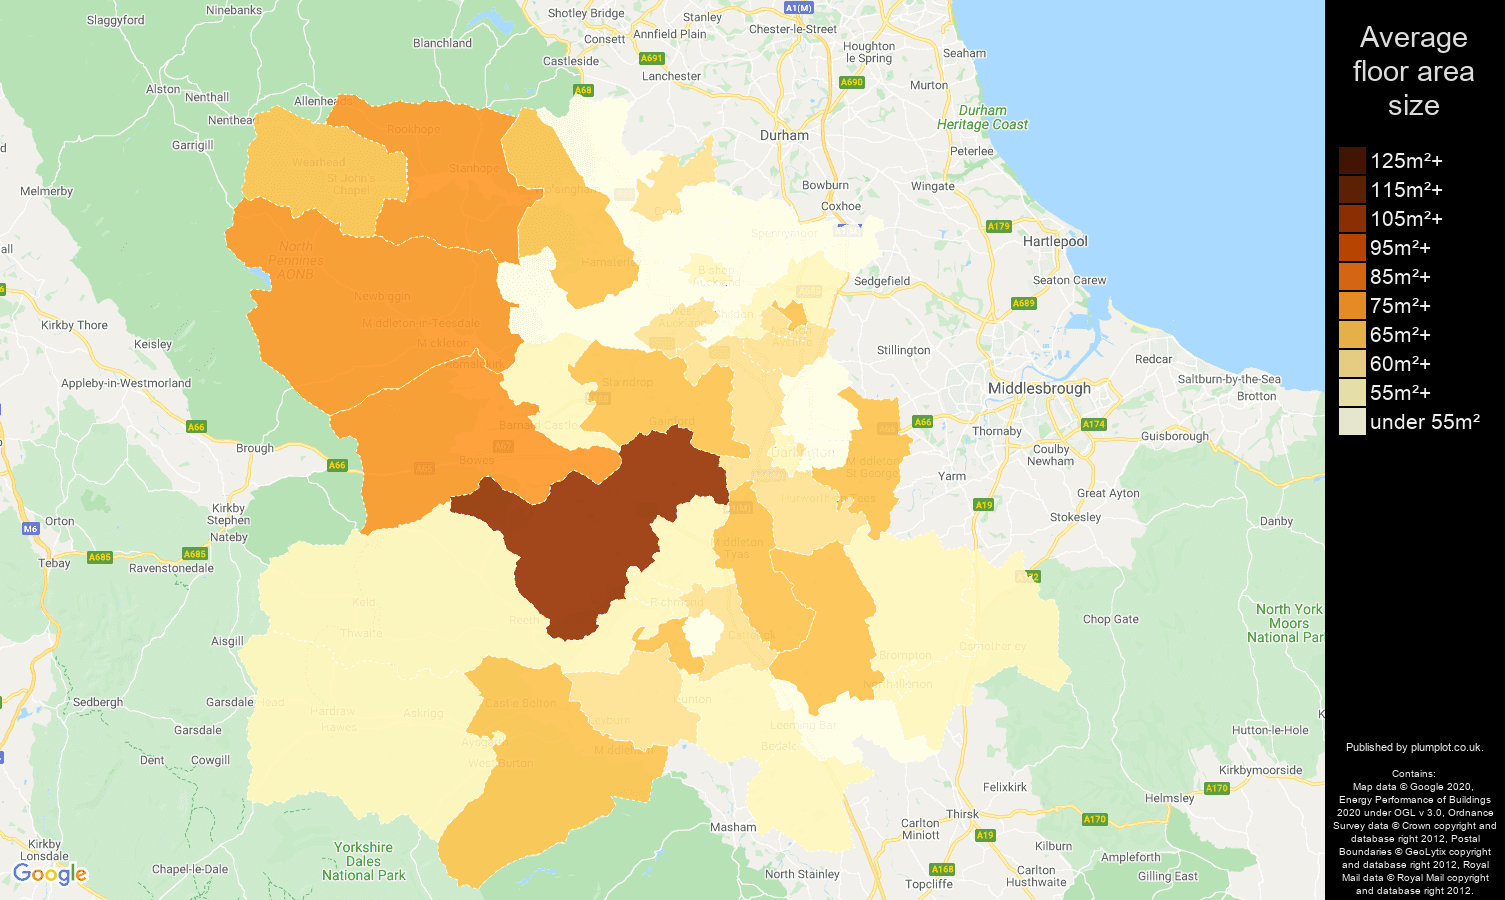 Darlington map of average floor area size of flats